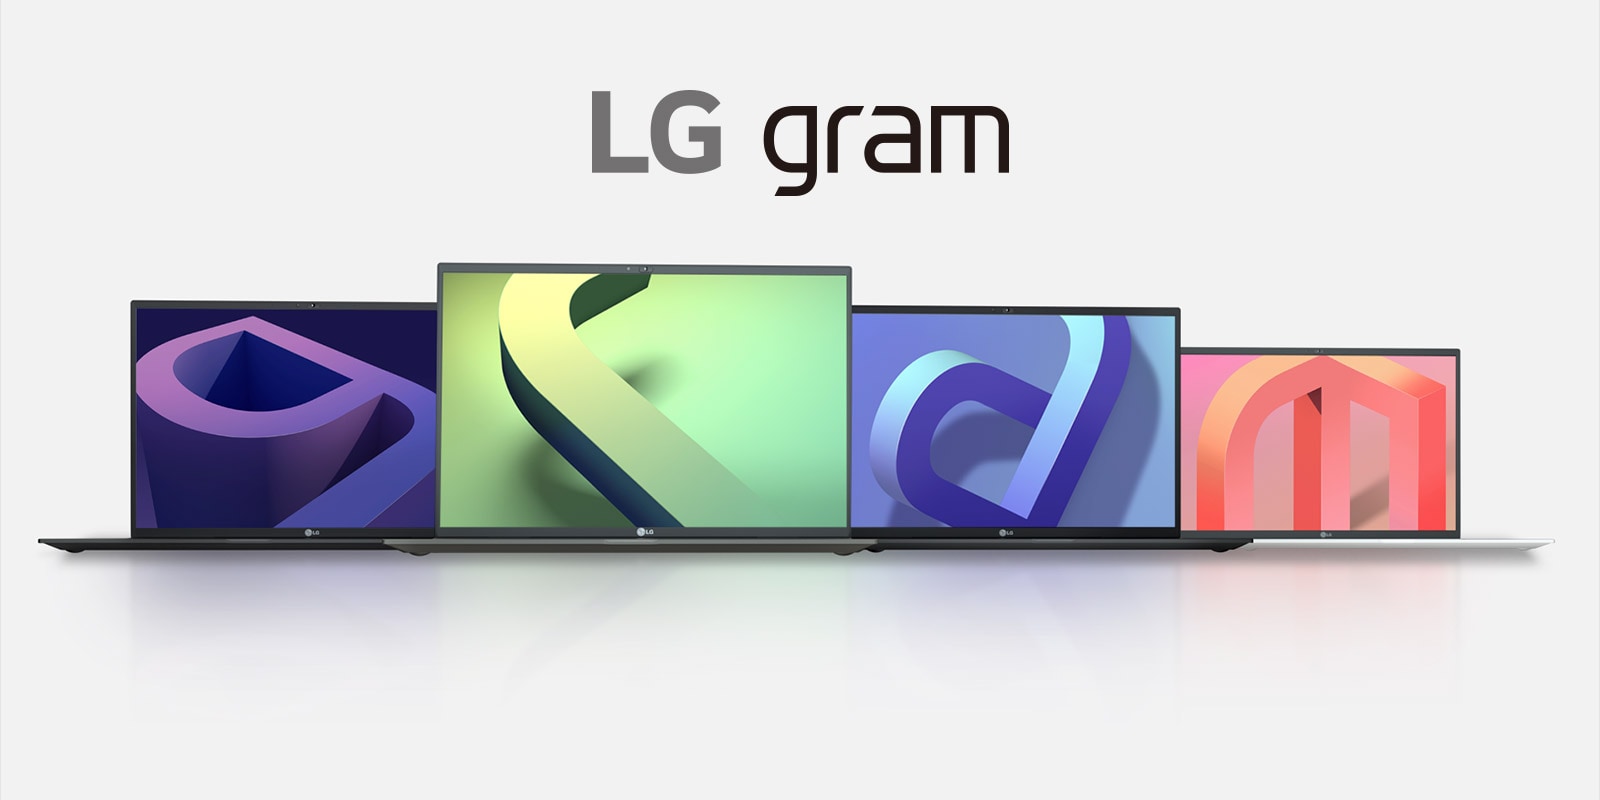 Линейки 2022. LG gram 2022. Ноутбуки LG 2022. LG gram 2022notebook. Линейка телевизоров LG 2022.